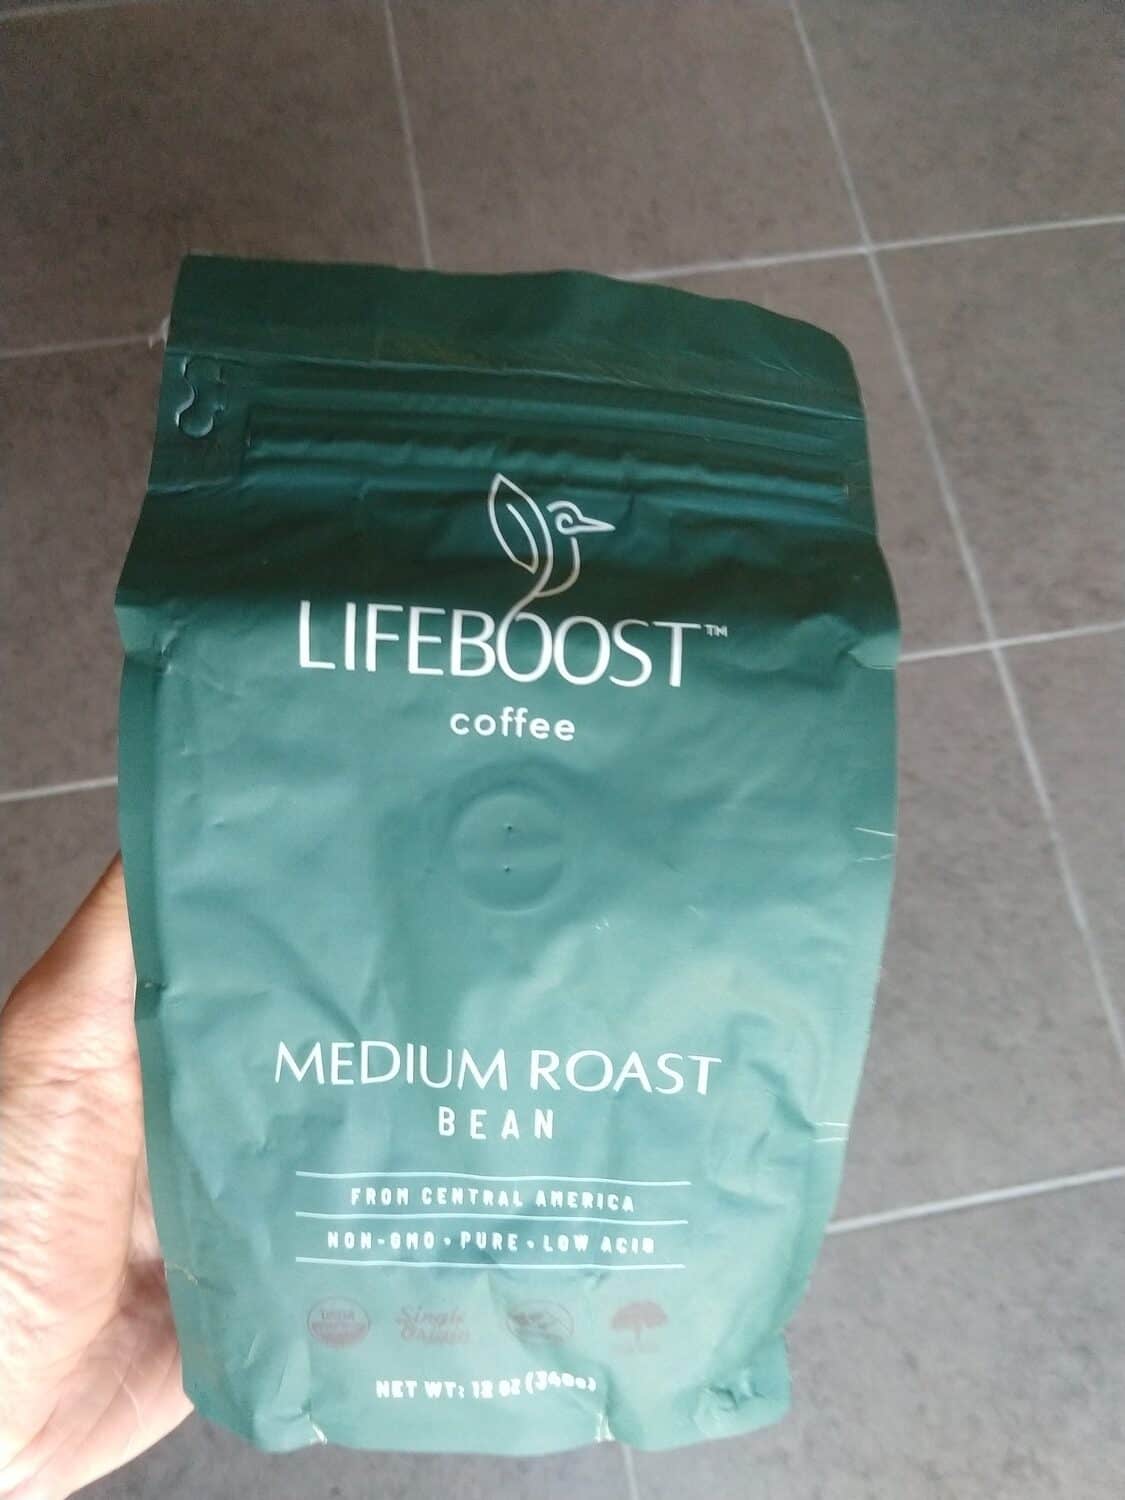 The Lifeboost medium roast coffee bag (front)